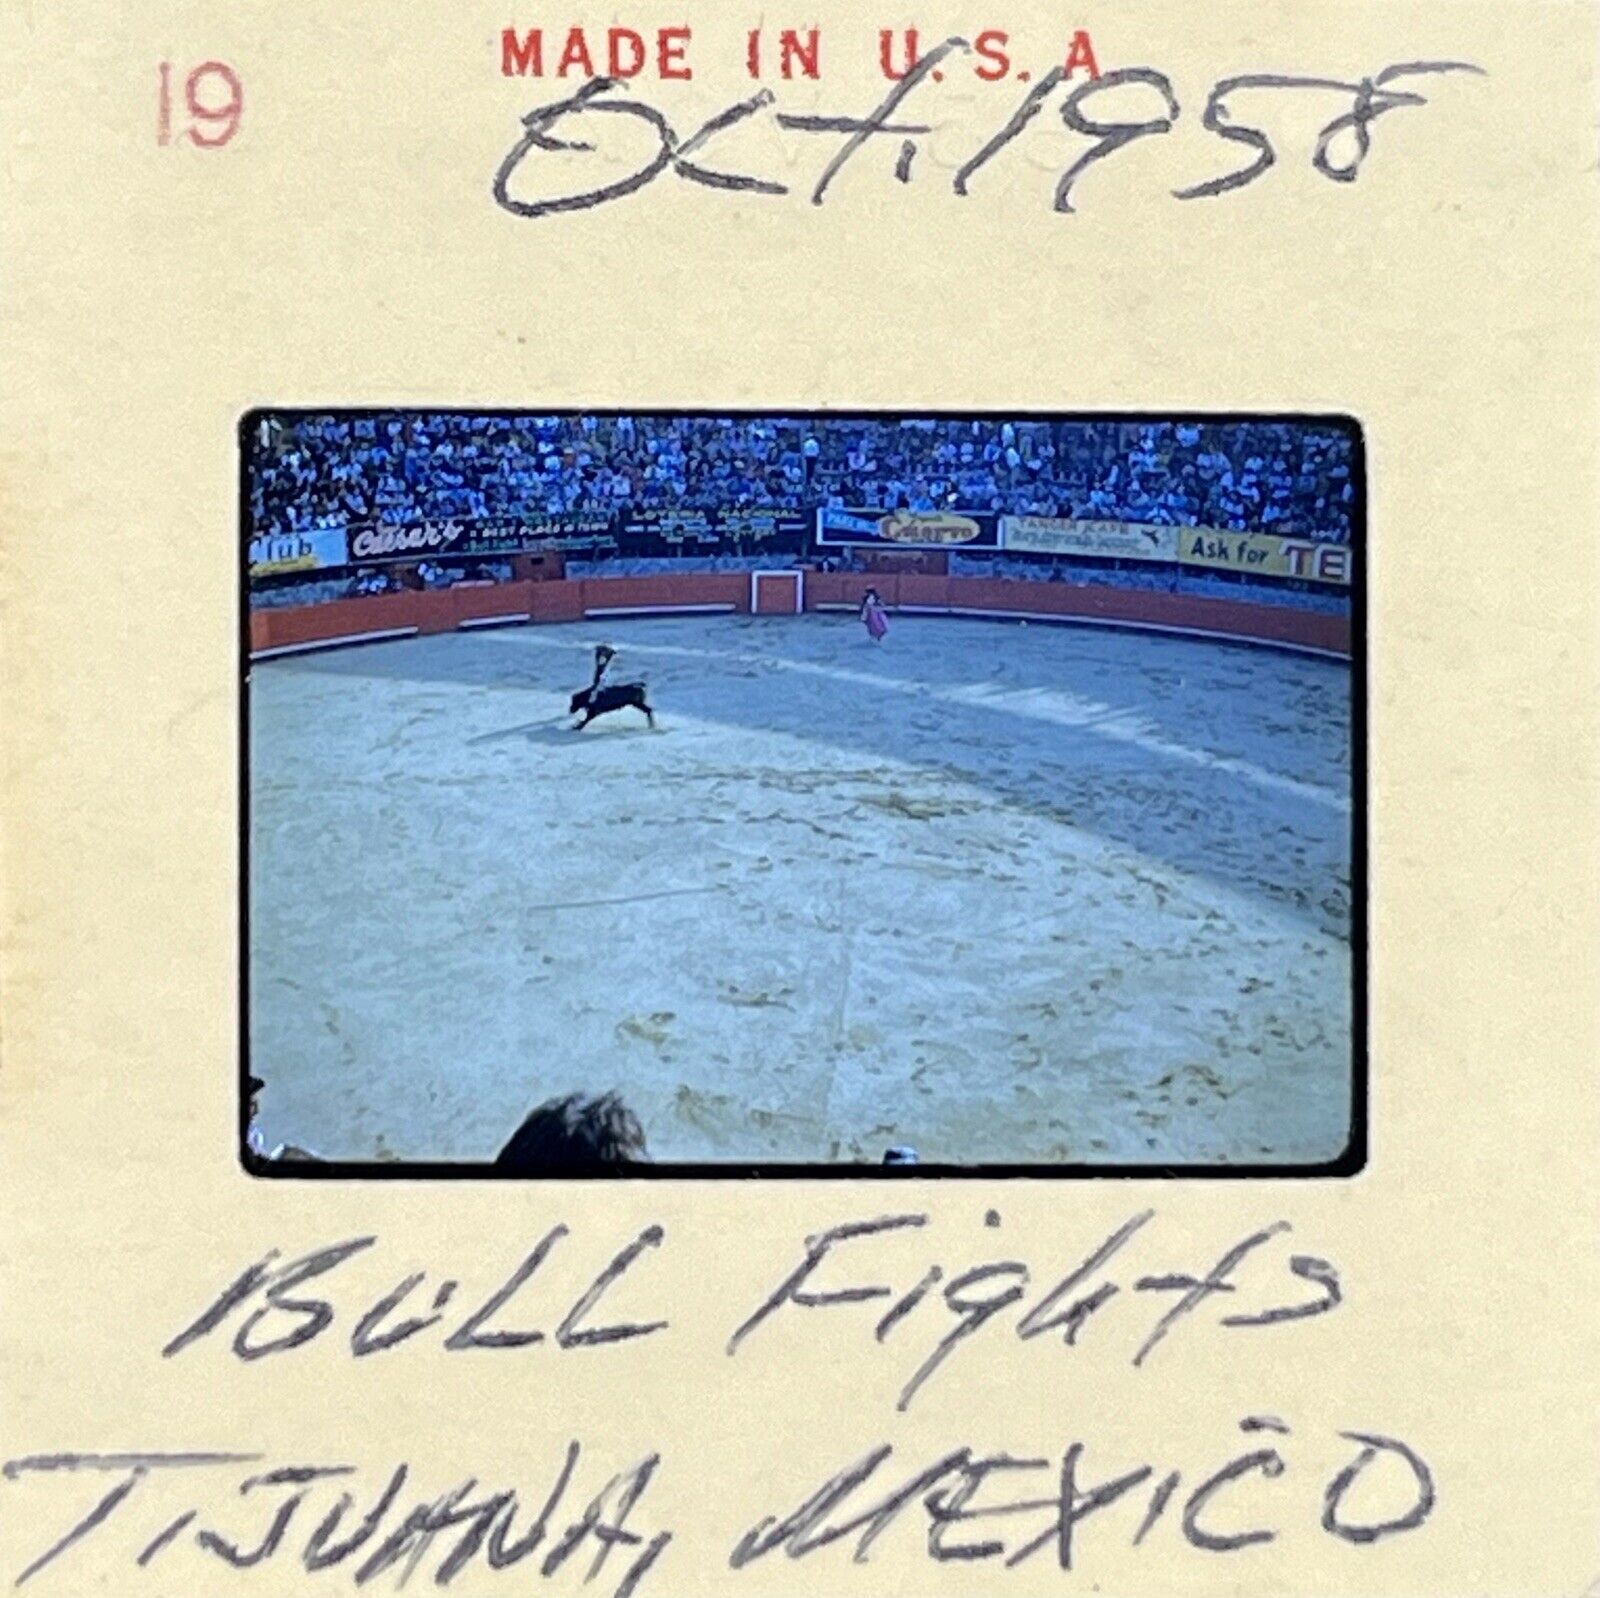 1958 Vintage 35mm Film Slide Bullfighter Tijuana Mexico Bull Fight 1950s MCM